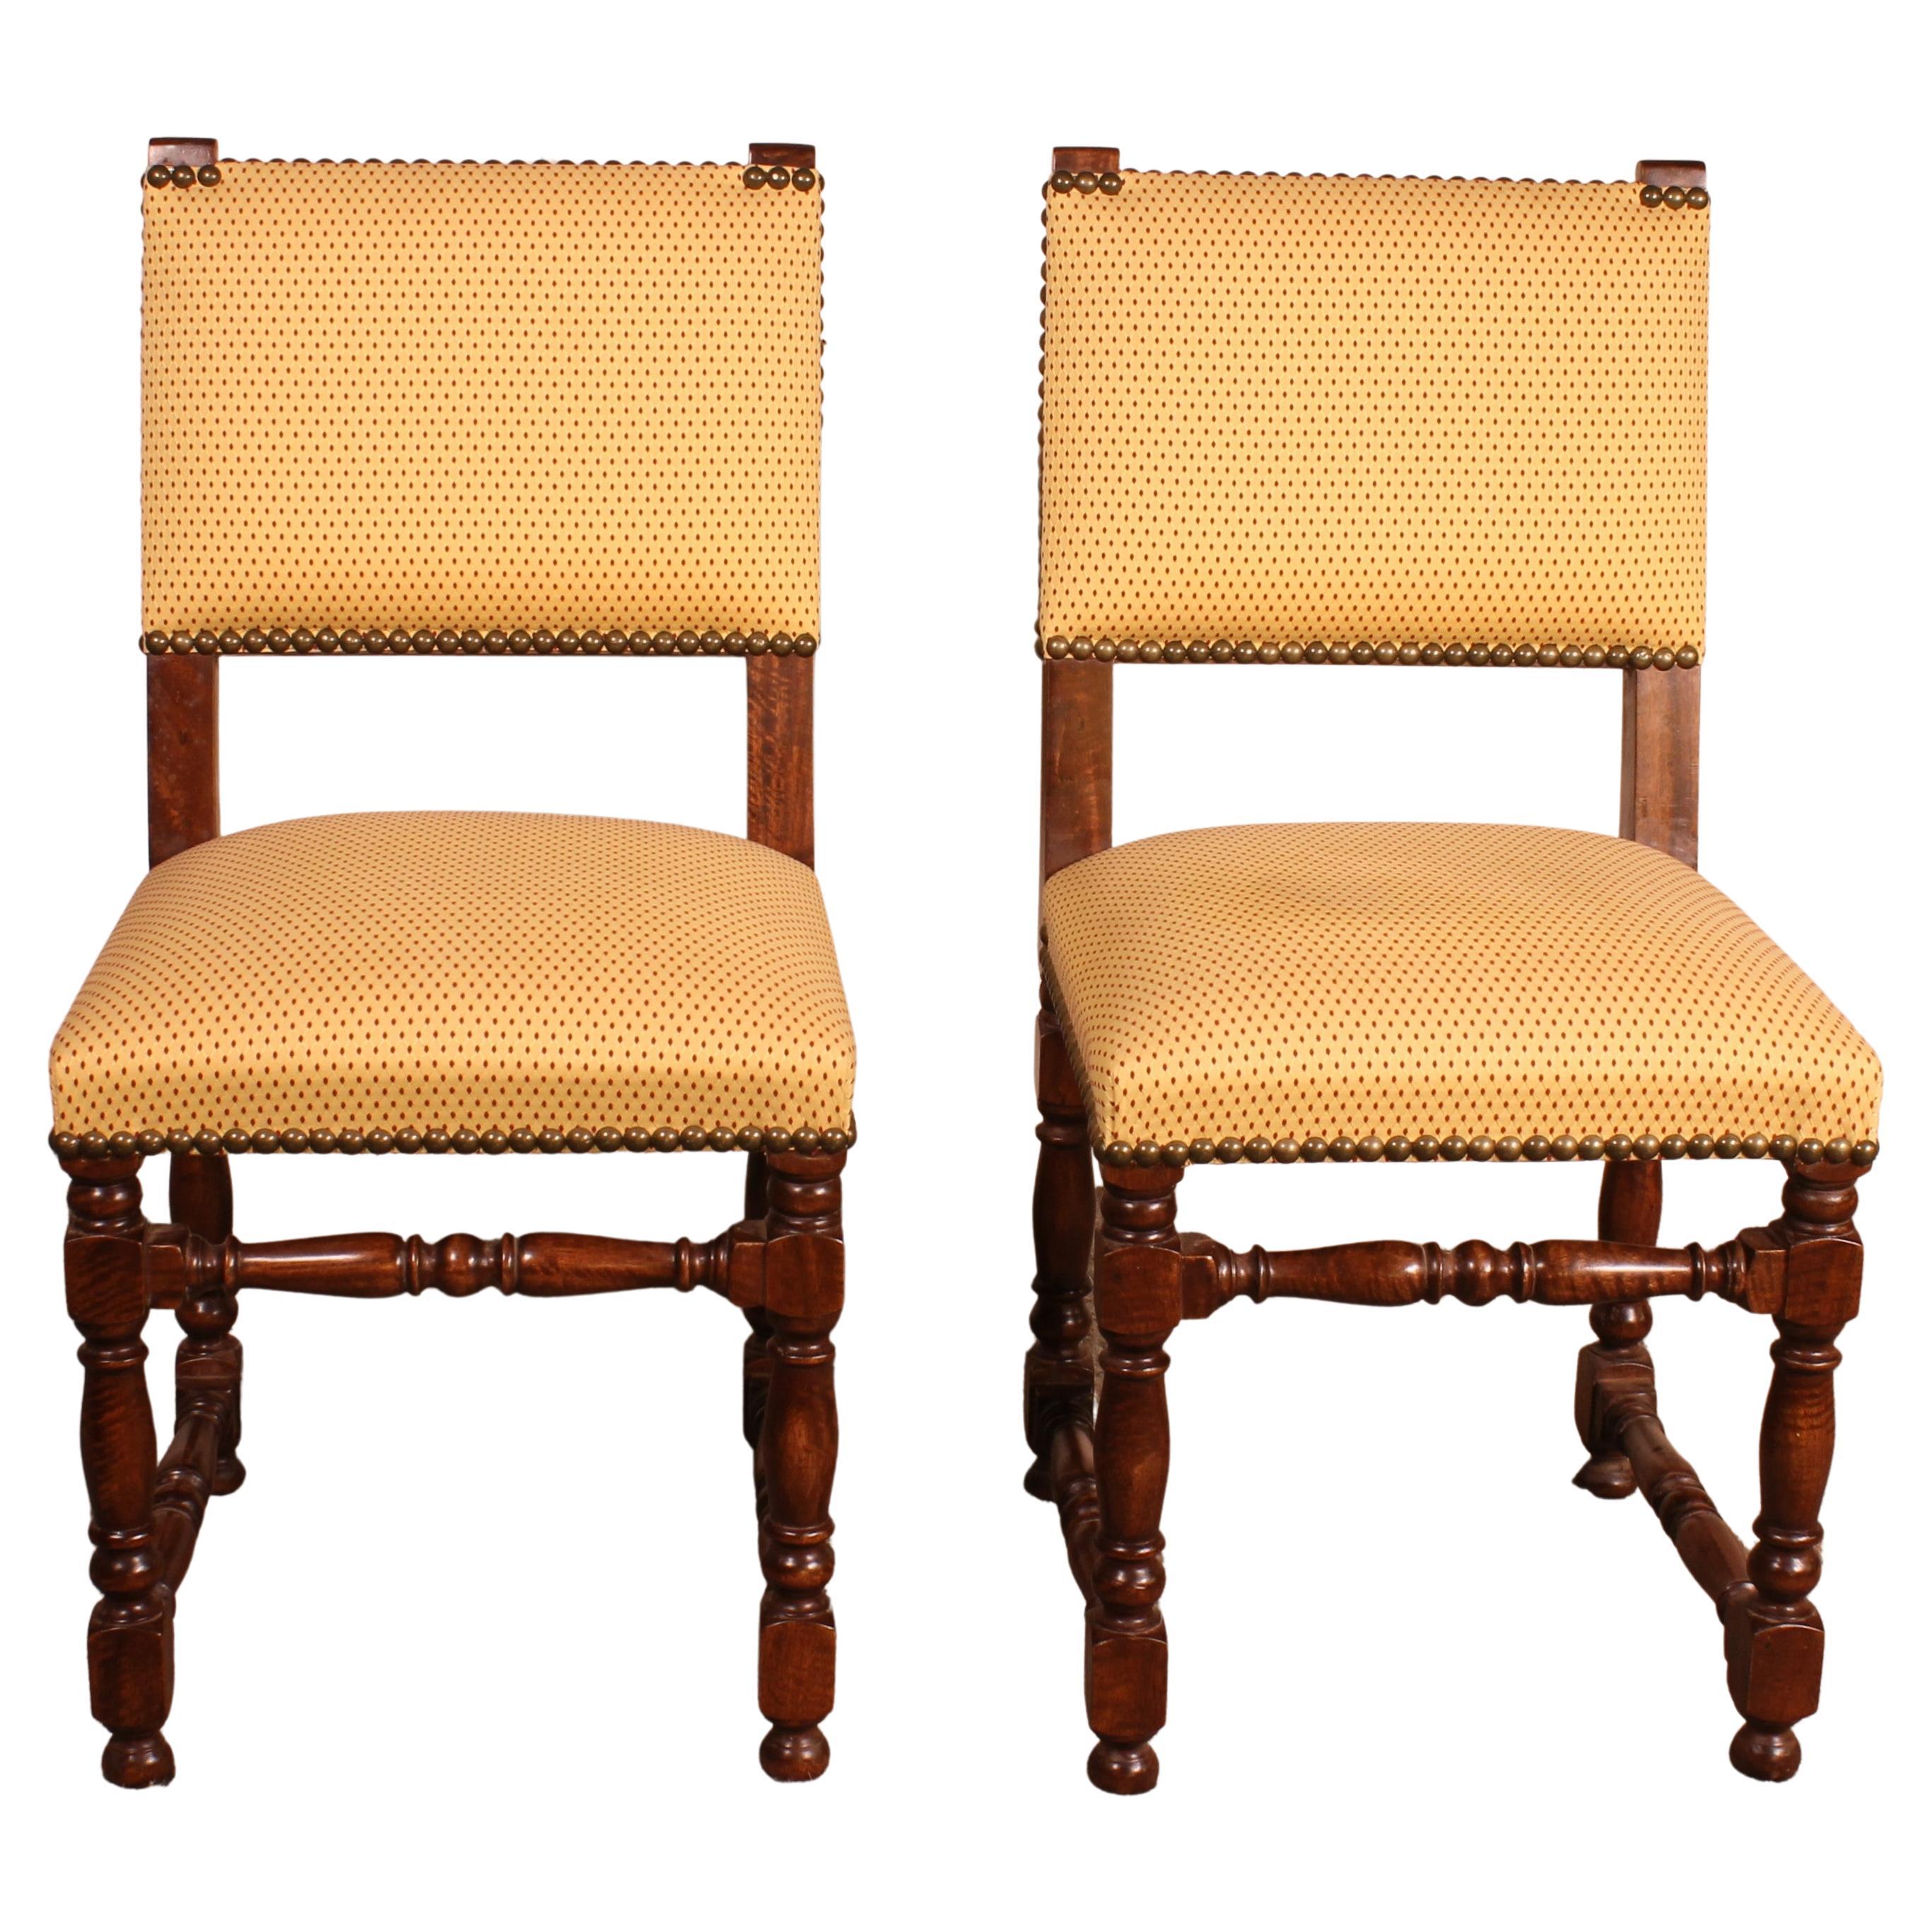 2 chaises de style Louis XIII en noyer